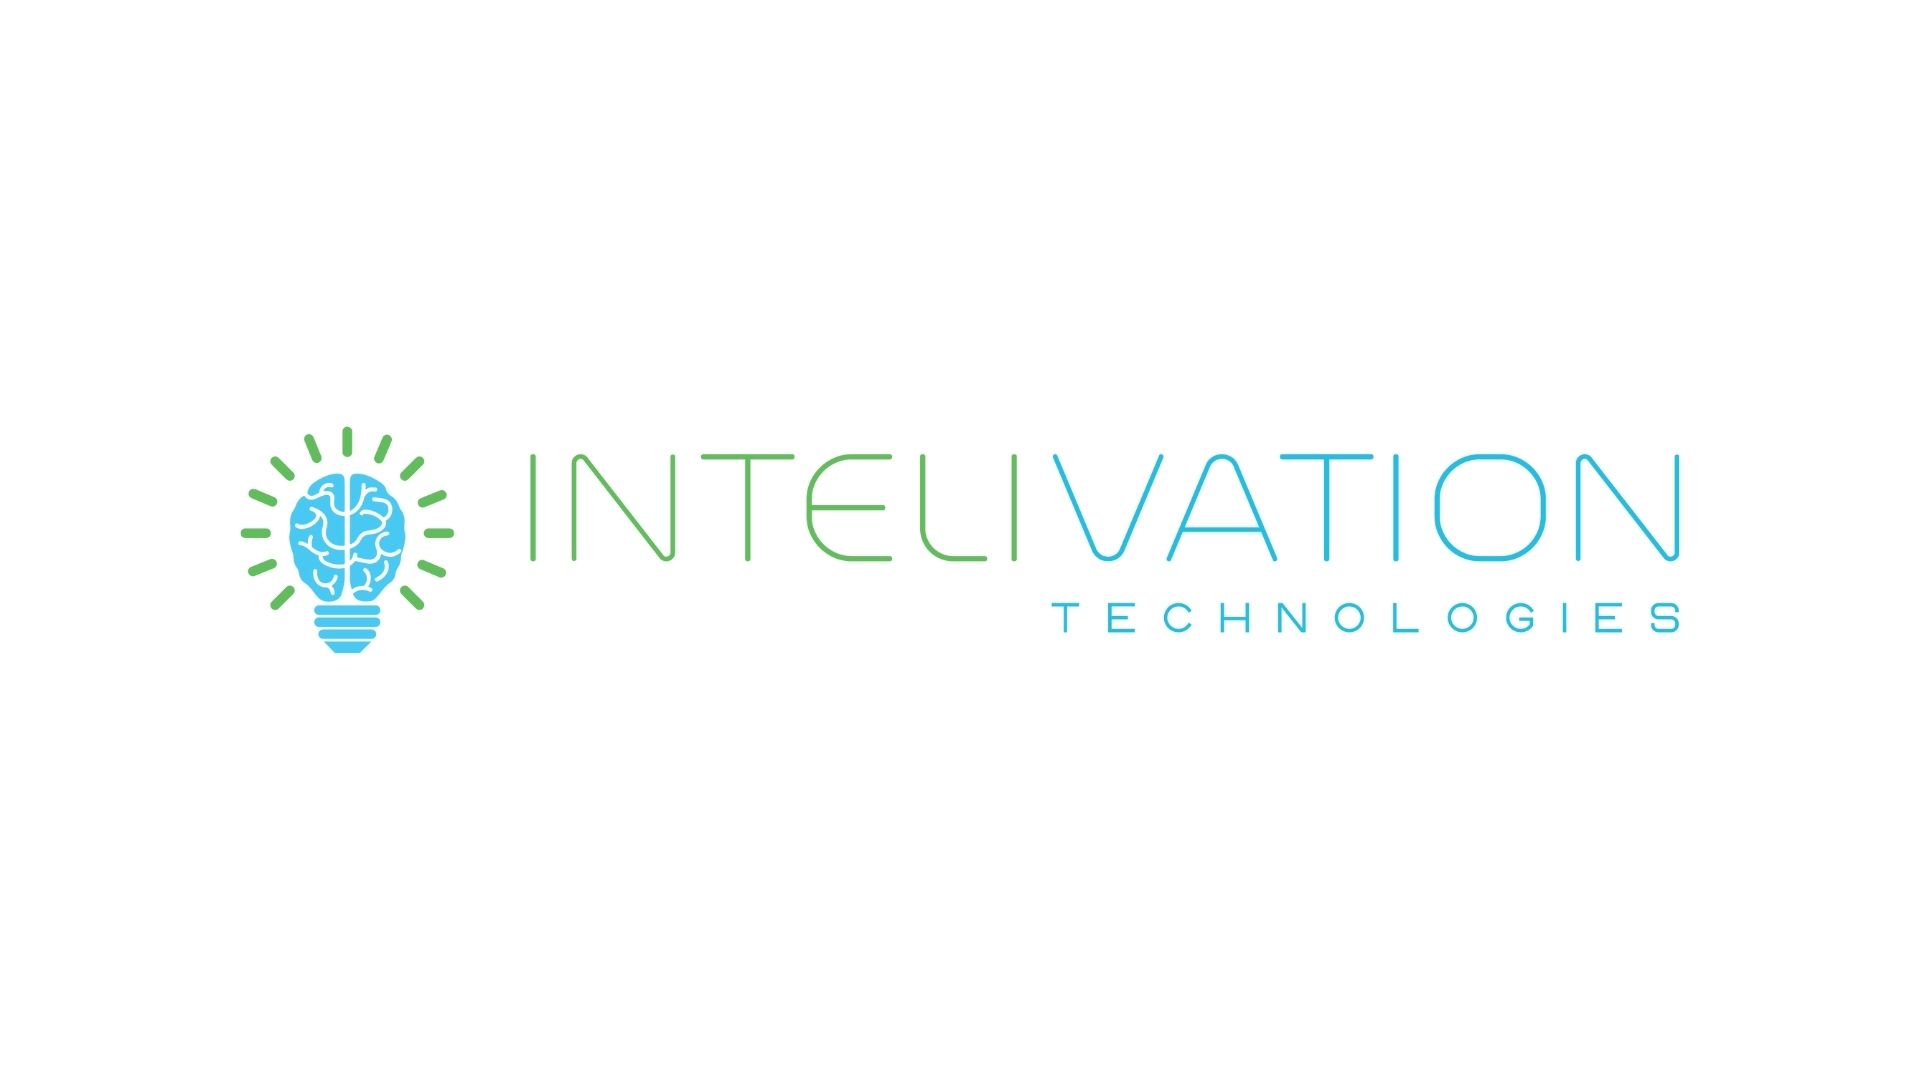 Intelivation Technologies logo